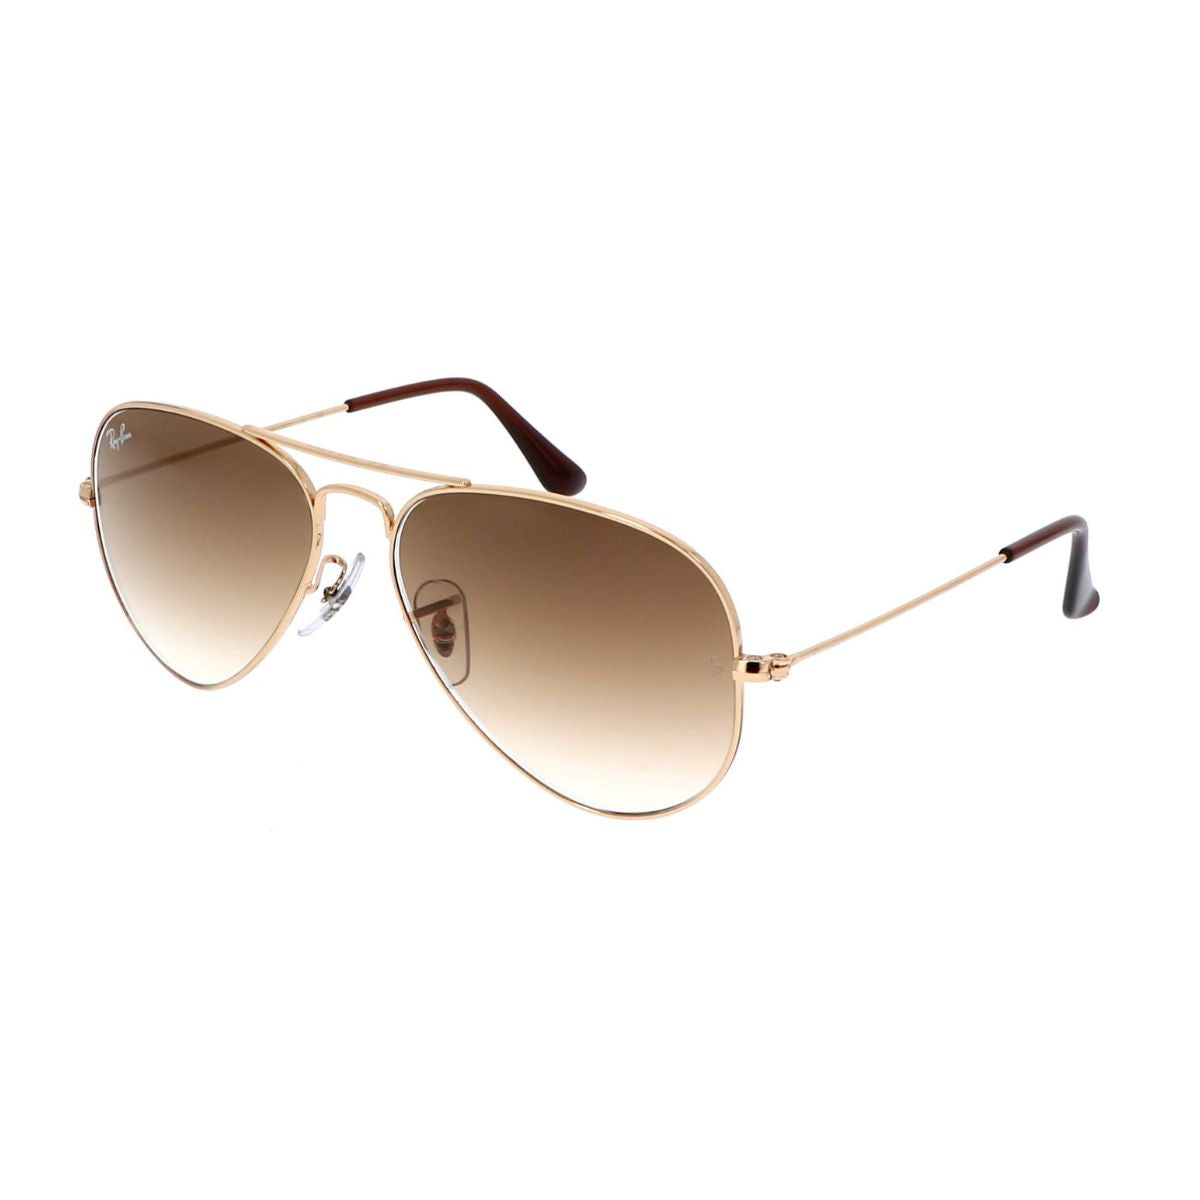 "Rayban 3025 001/51 Aviator Frame UV Sunglasses For Men At Optorium"